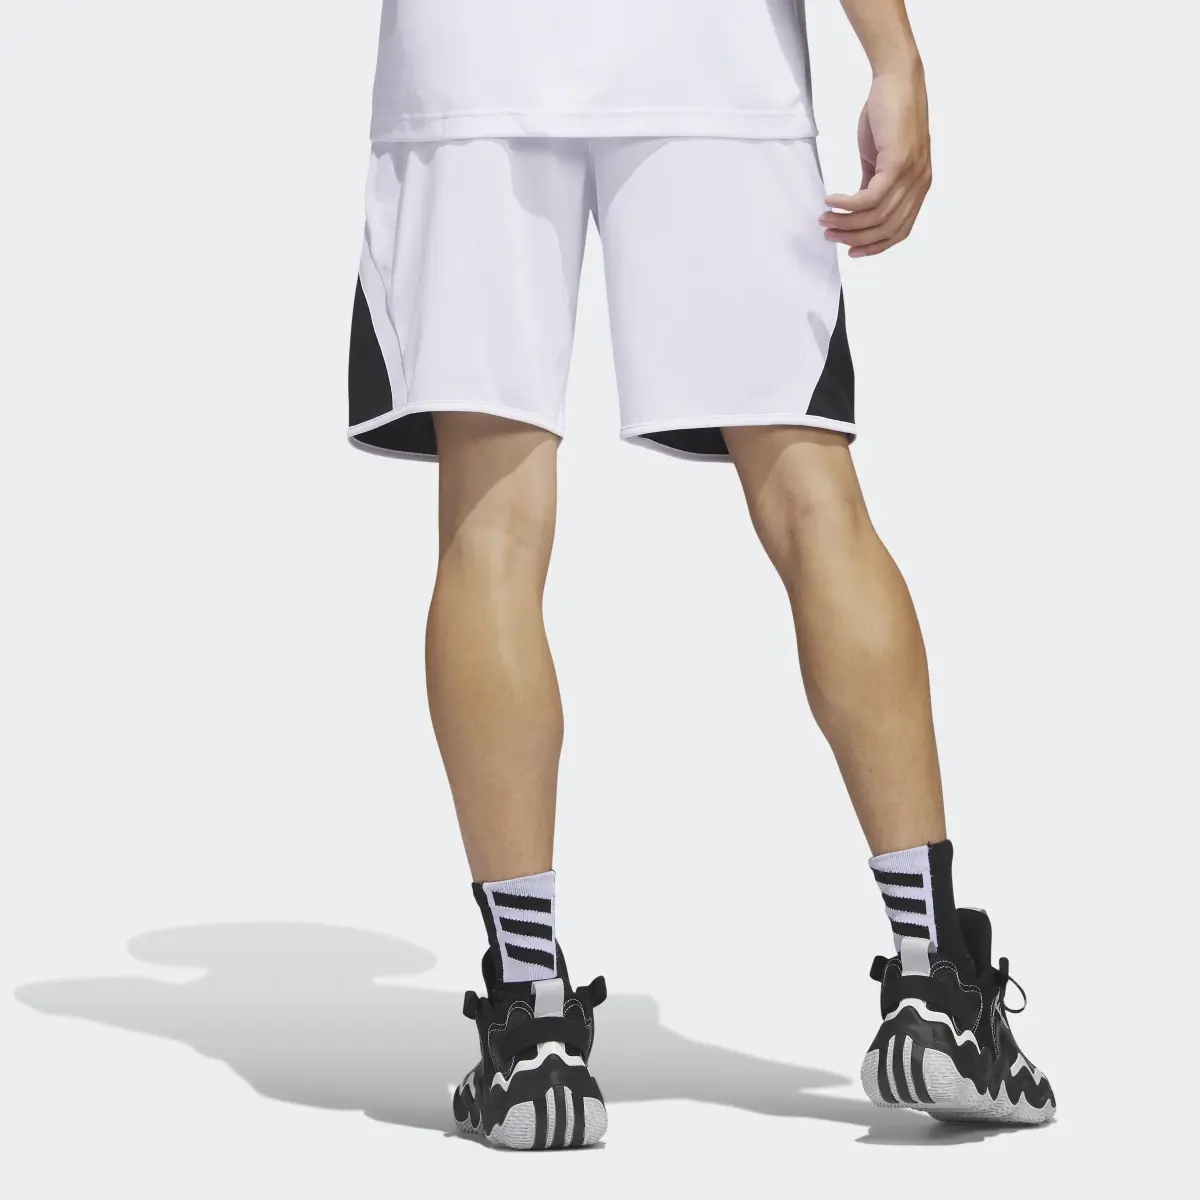 Adidas Pro Block Shorts. 2